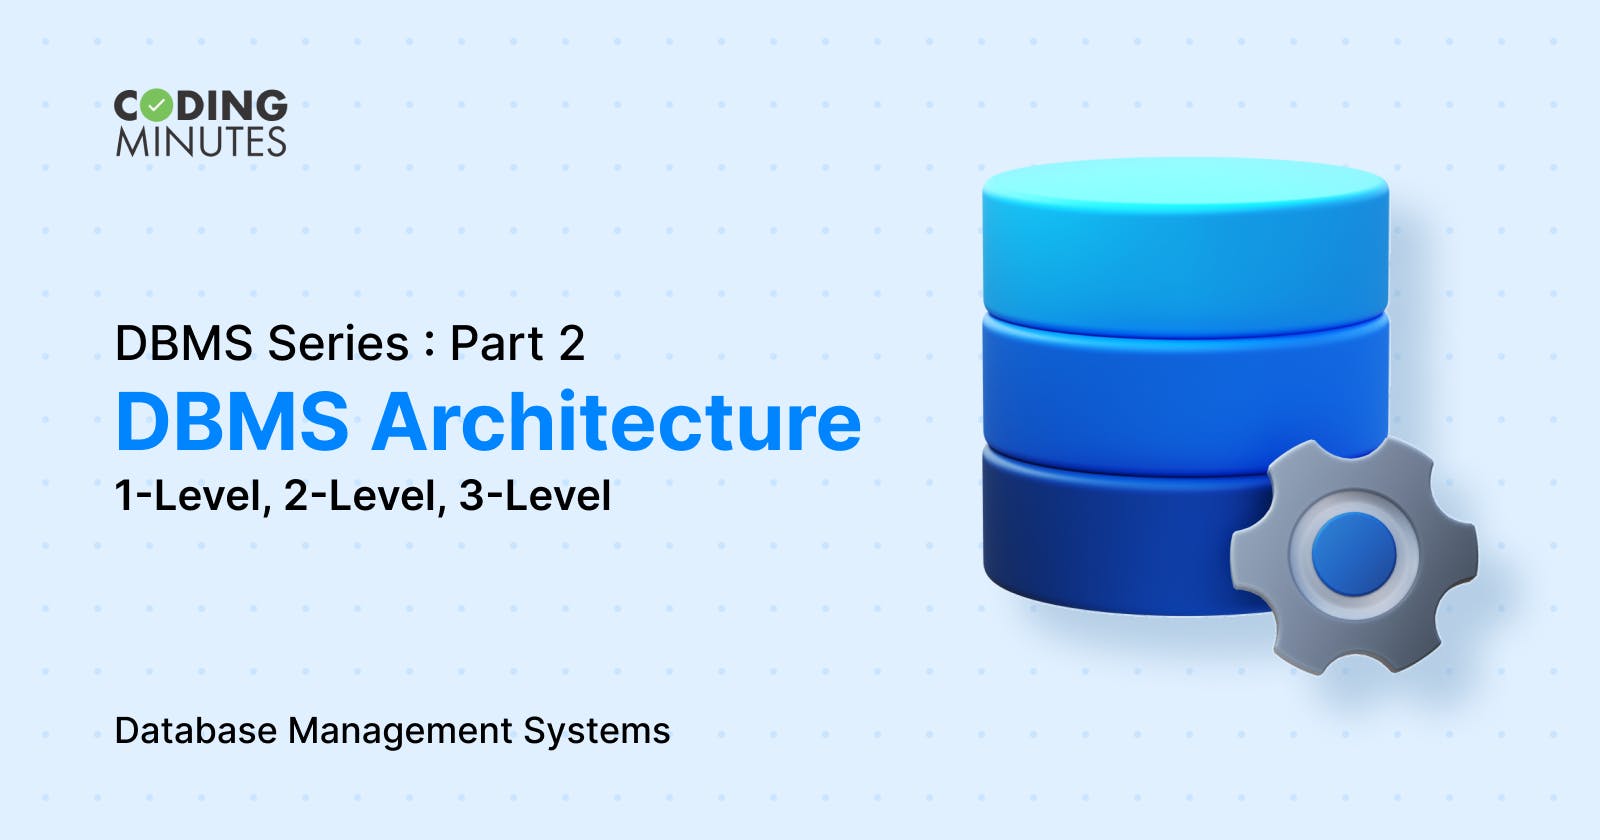 DBMS Series Part 2: DBMS Architecture